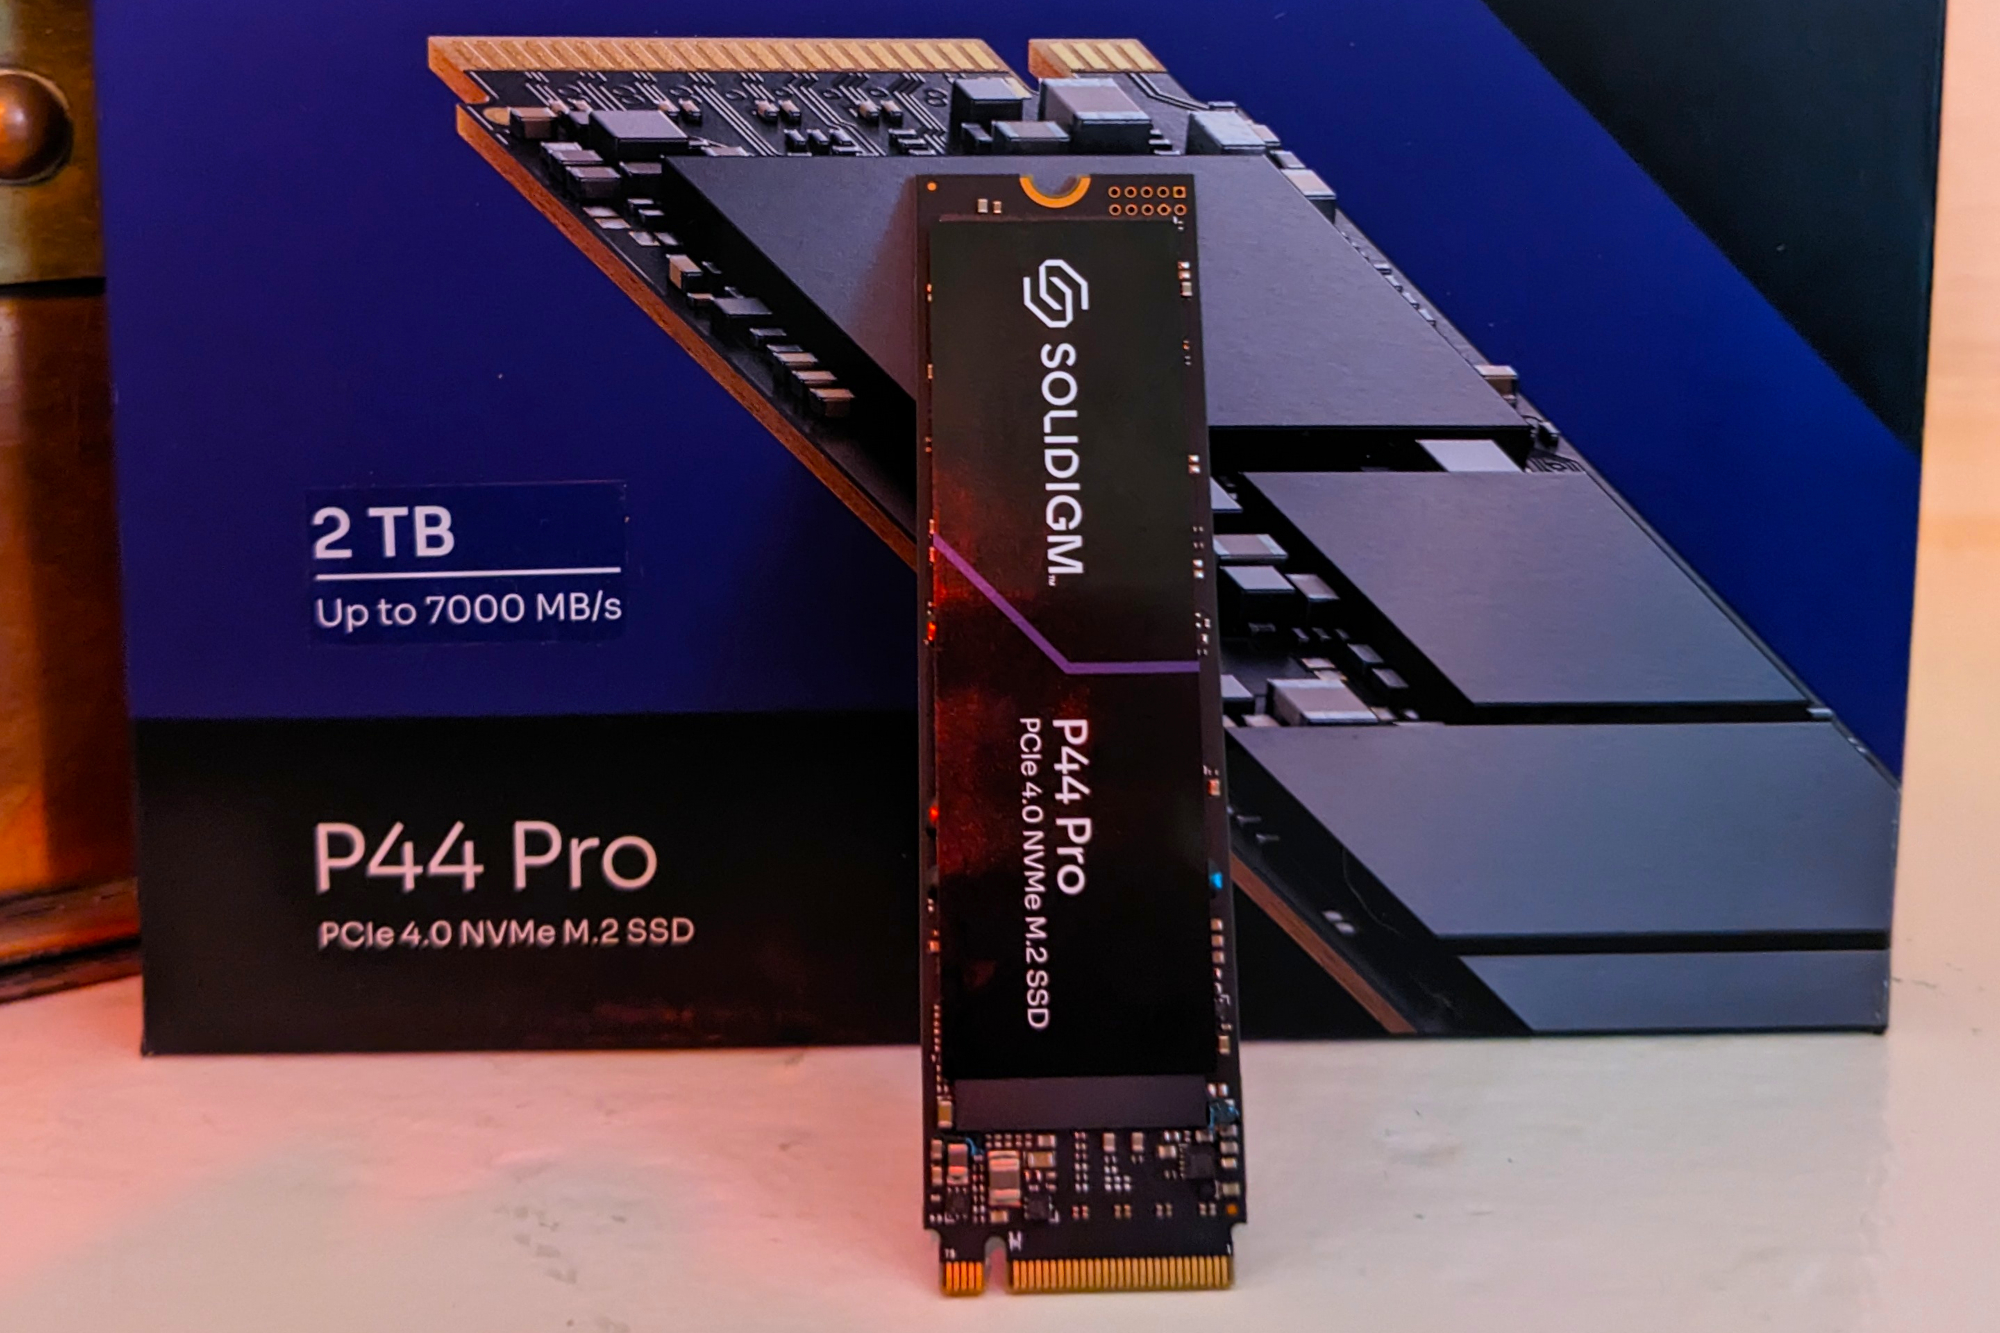 Solidigm P44 Pro SSD - Best PCIe 4.0 SSD